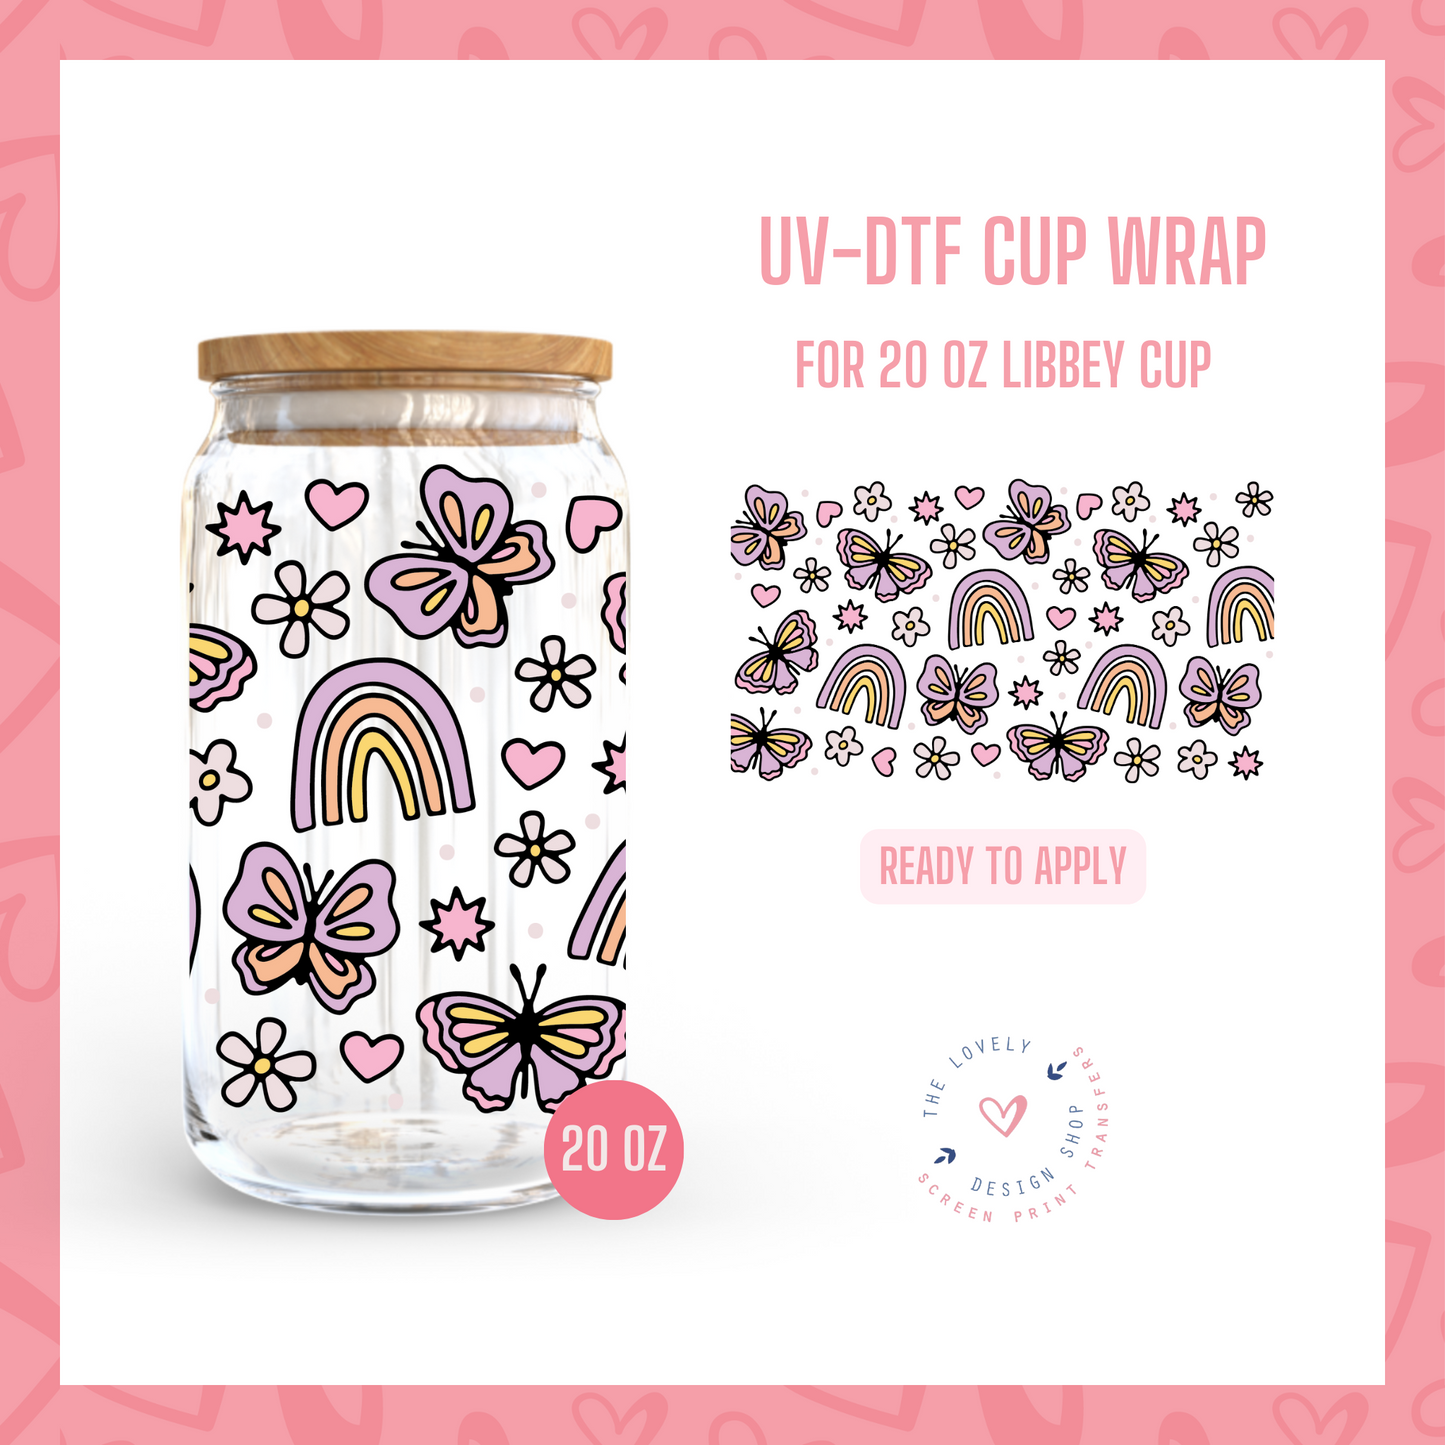 Spring Fling - UV DTF 20 oz Libbey Cup Wrap (Ready to Ship) Apr 29